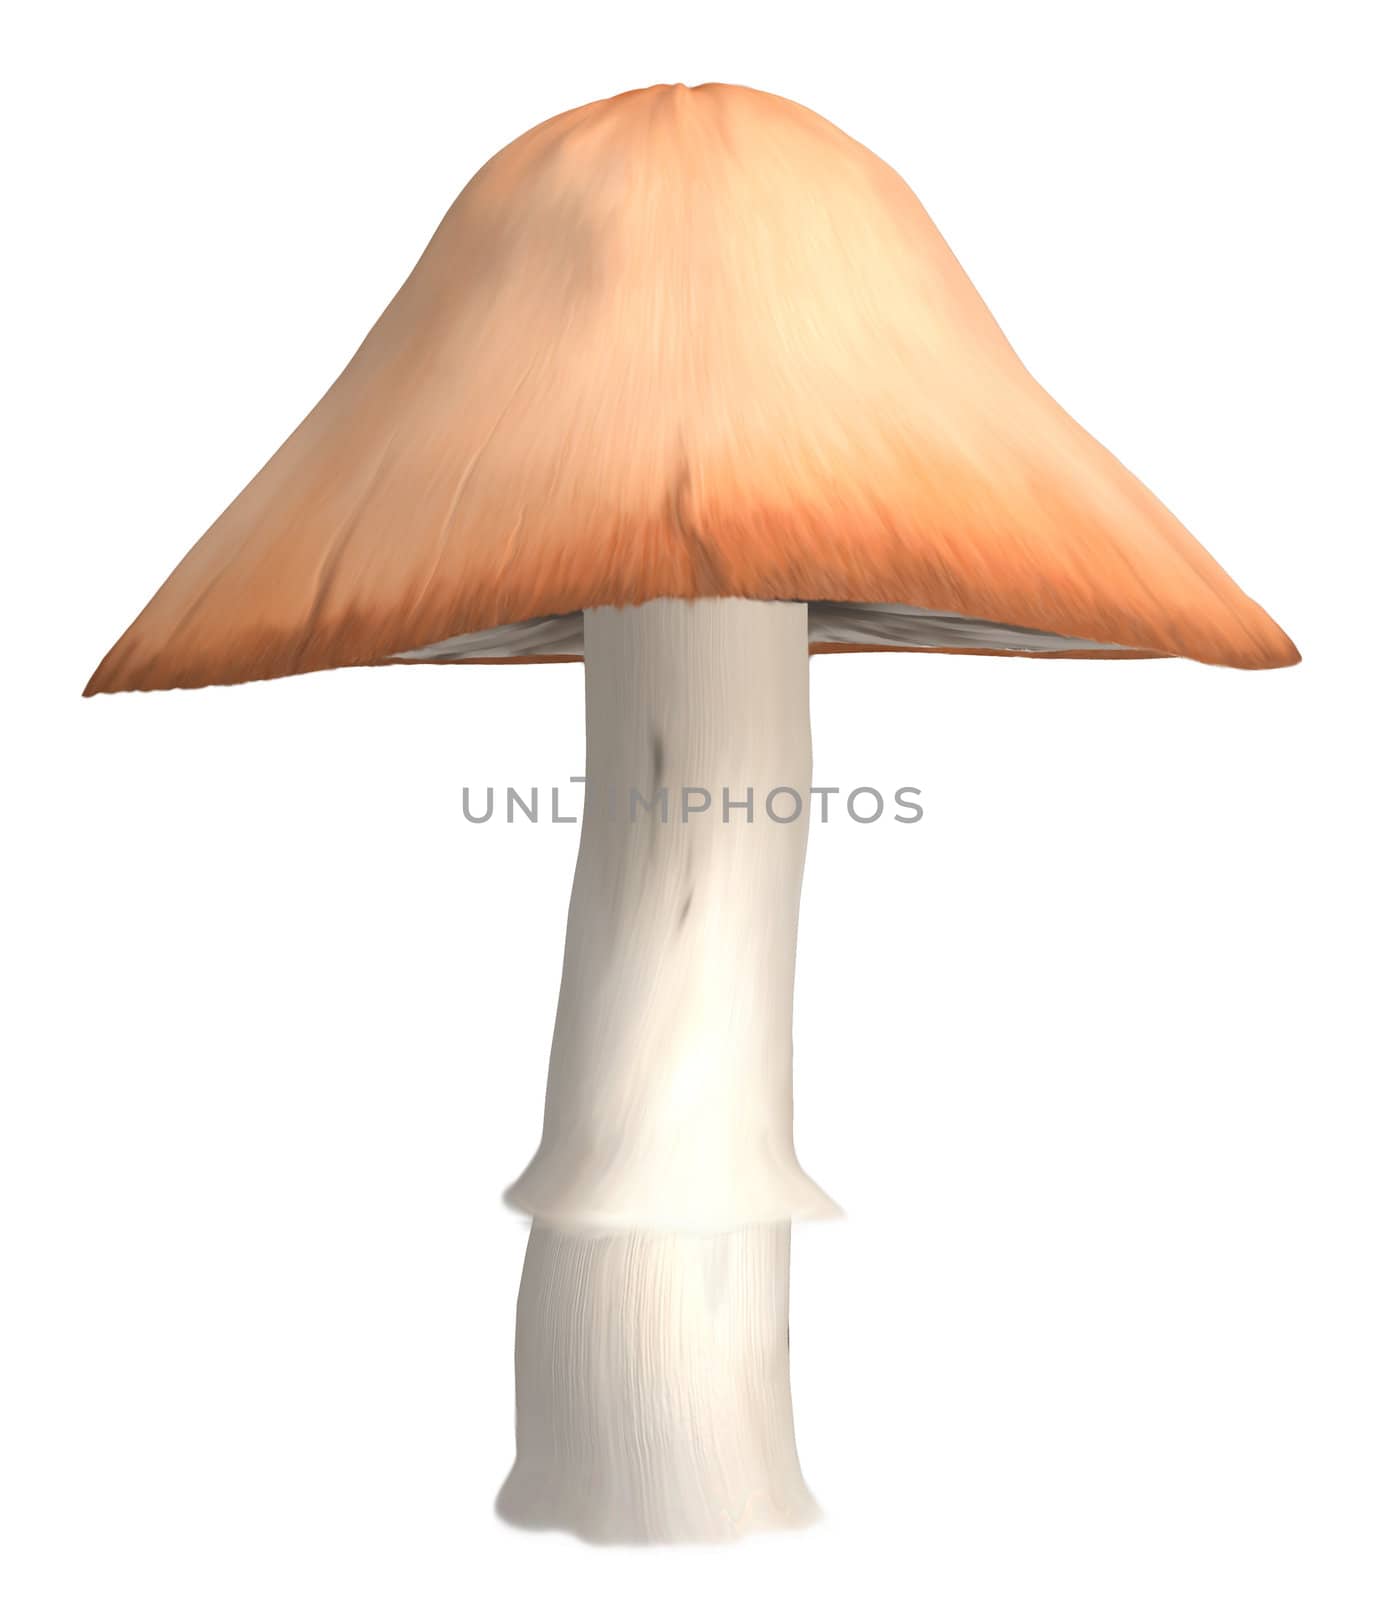 Orange mushroom with white stem on a what background